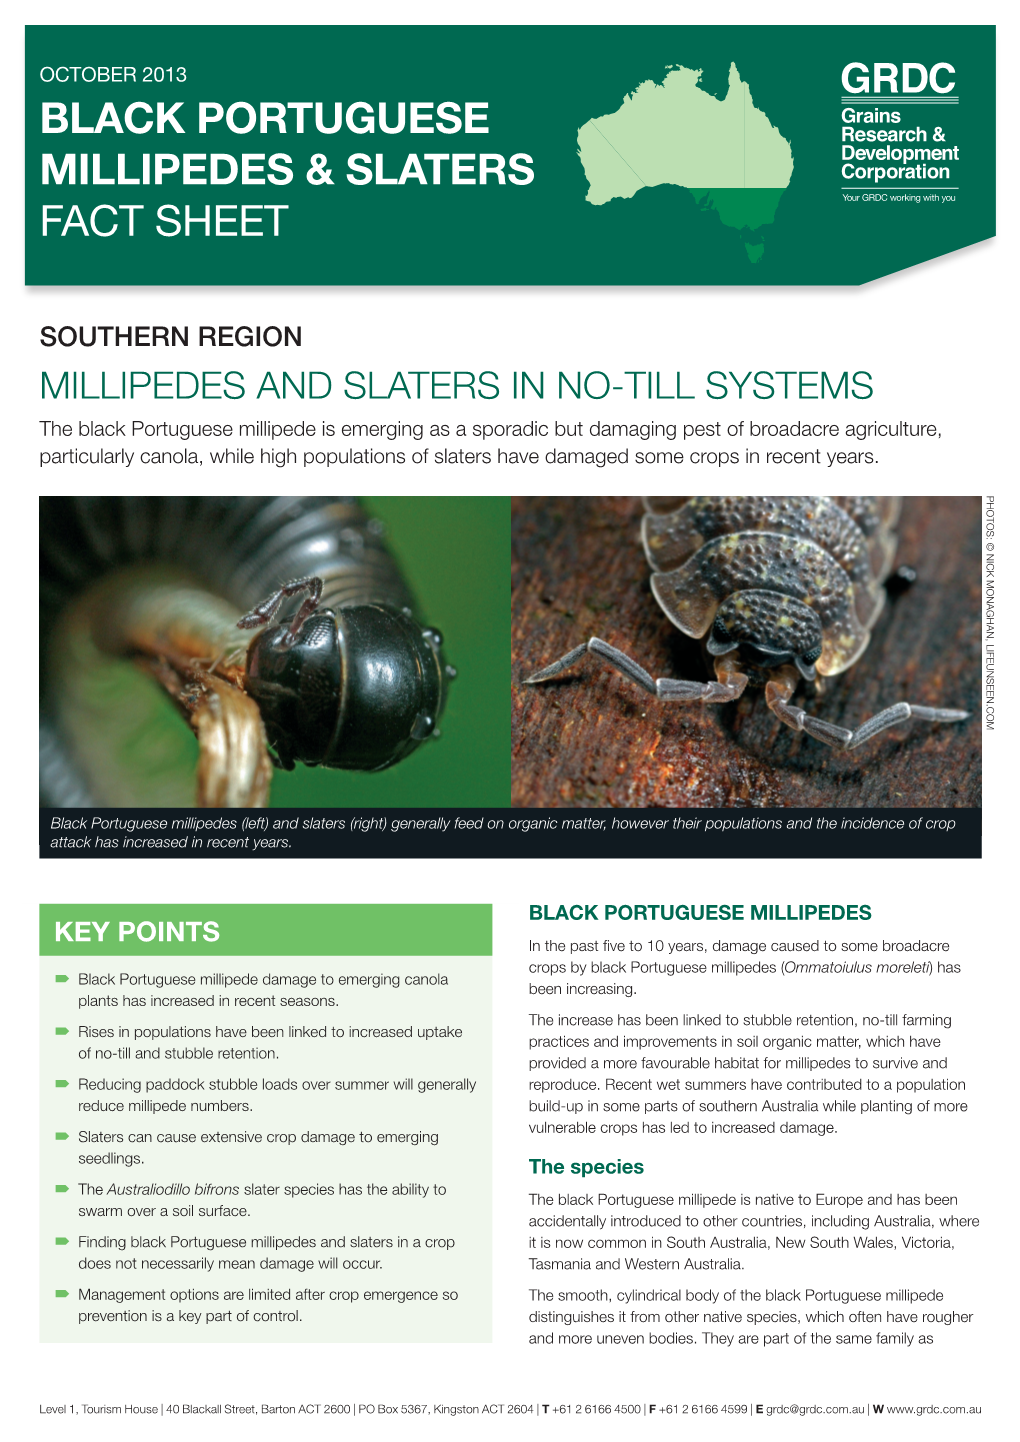 Black Portuguese Millipedes & Slaters Fact Sheet